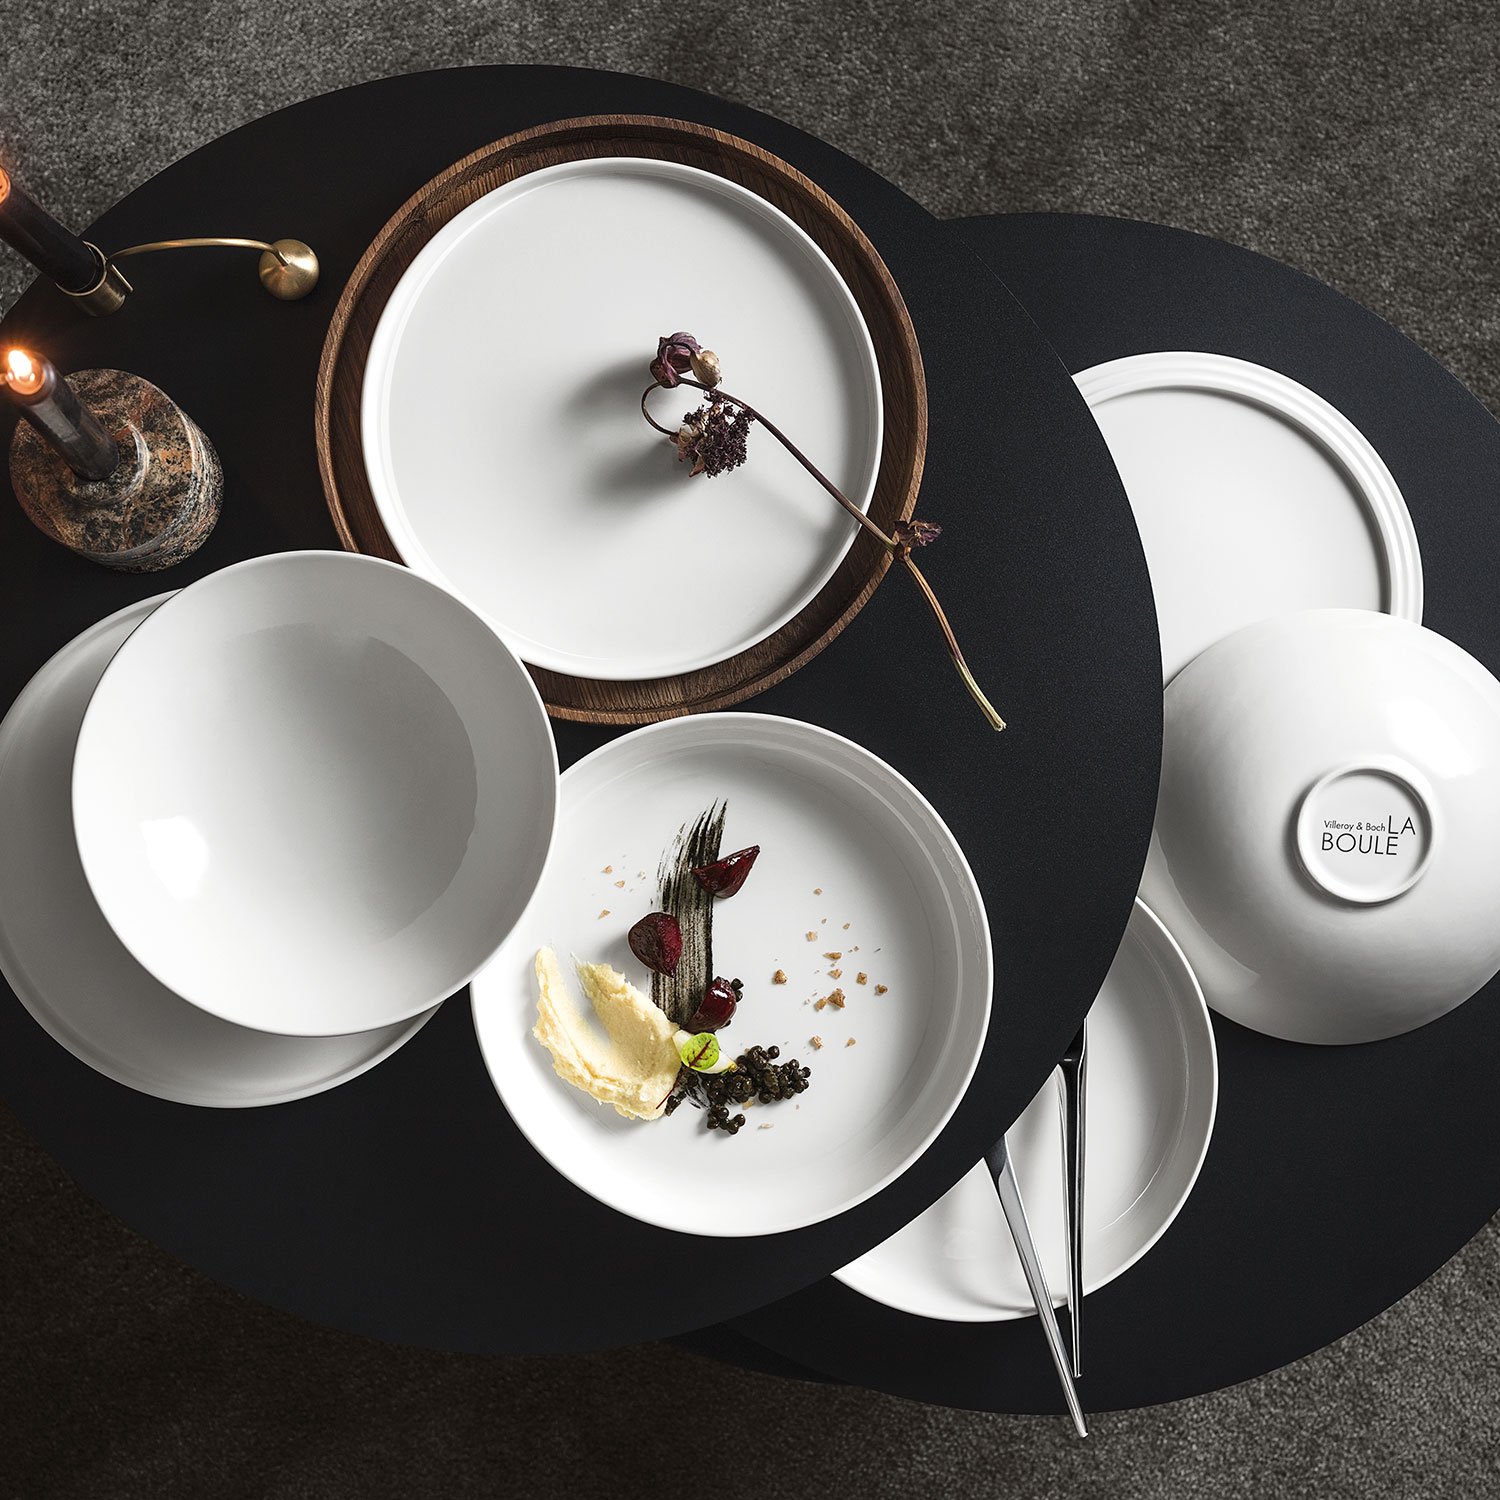 Iconic La Boule White Набор посуды 7 предметов на 2 персоны Villeroy & Boch
https://spb.v-b.ru
г.Санкт-Петербург
eshop@v-b.spb.ru
+7(812)3801977